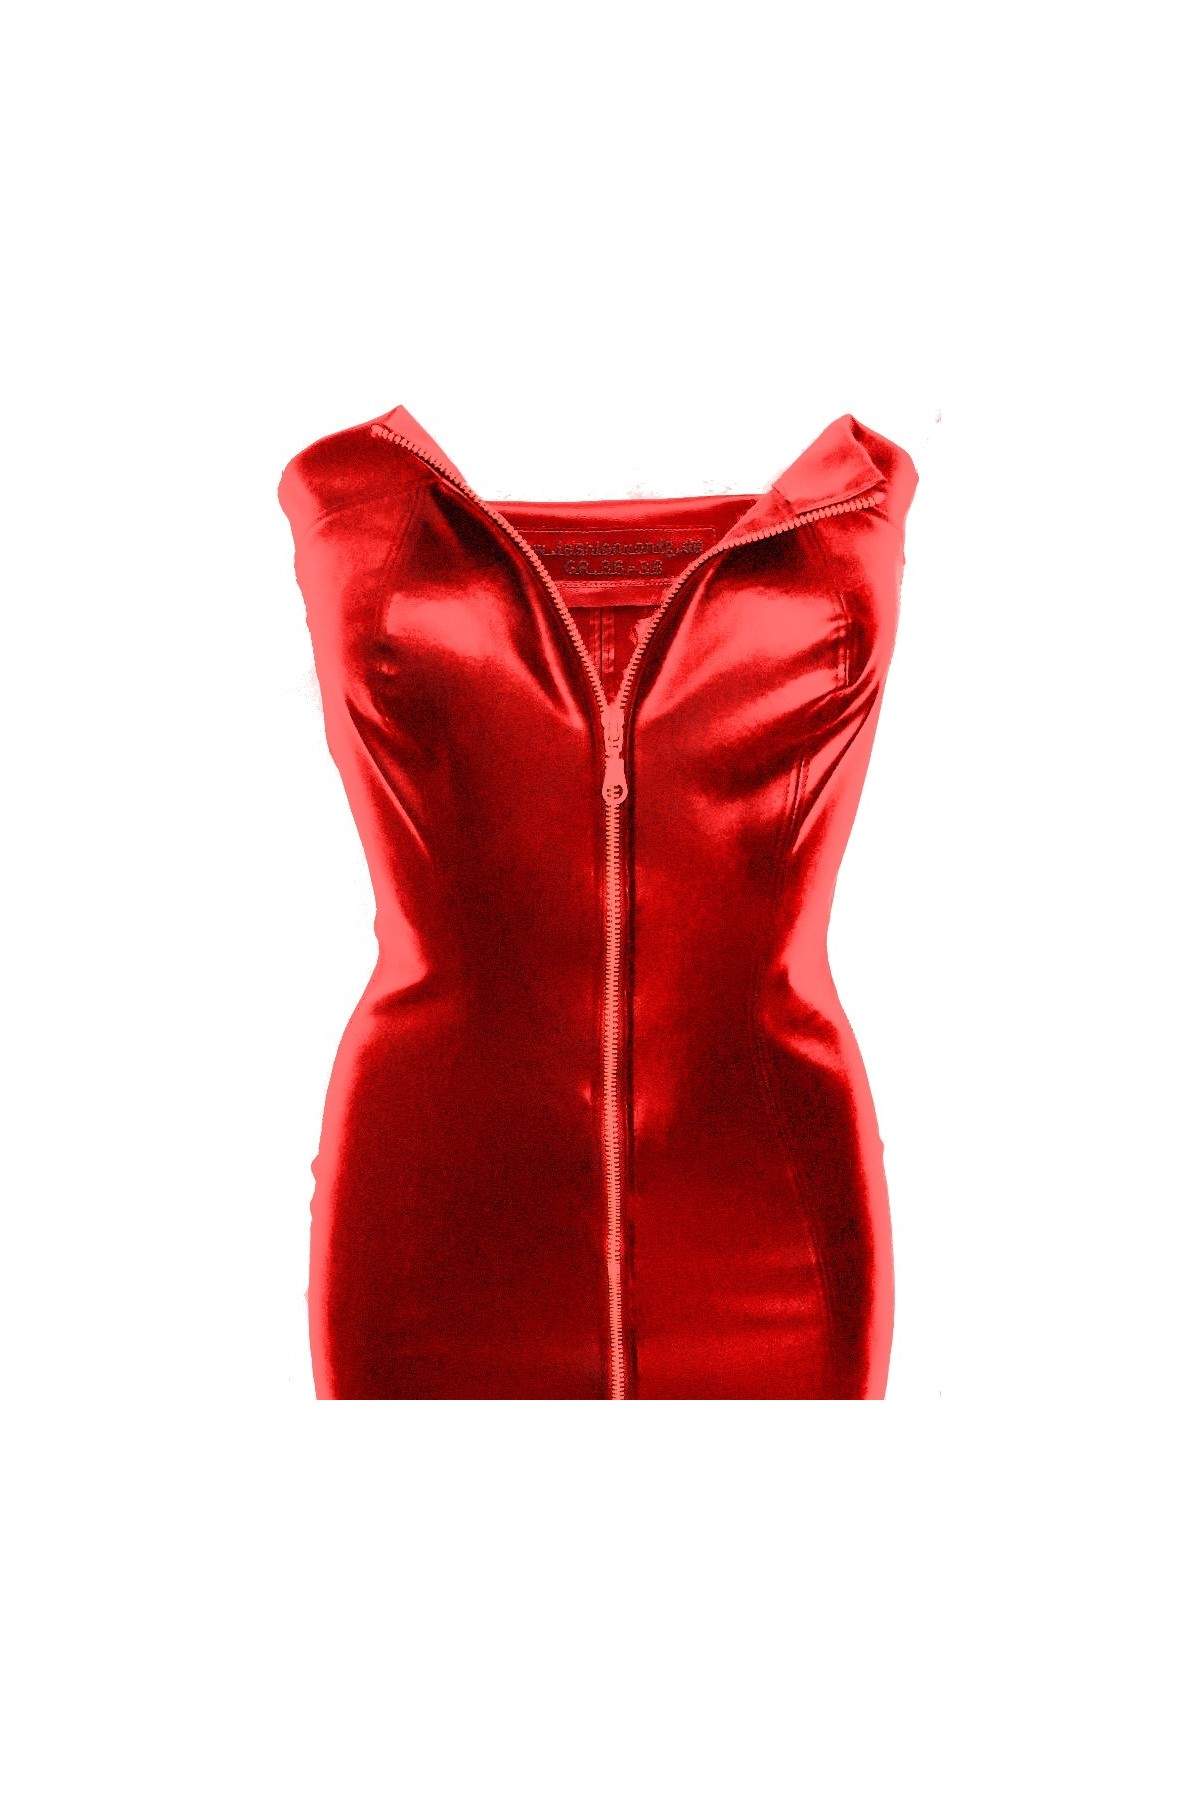 Leather dress red imitation leather - Rabatt